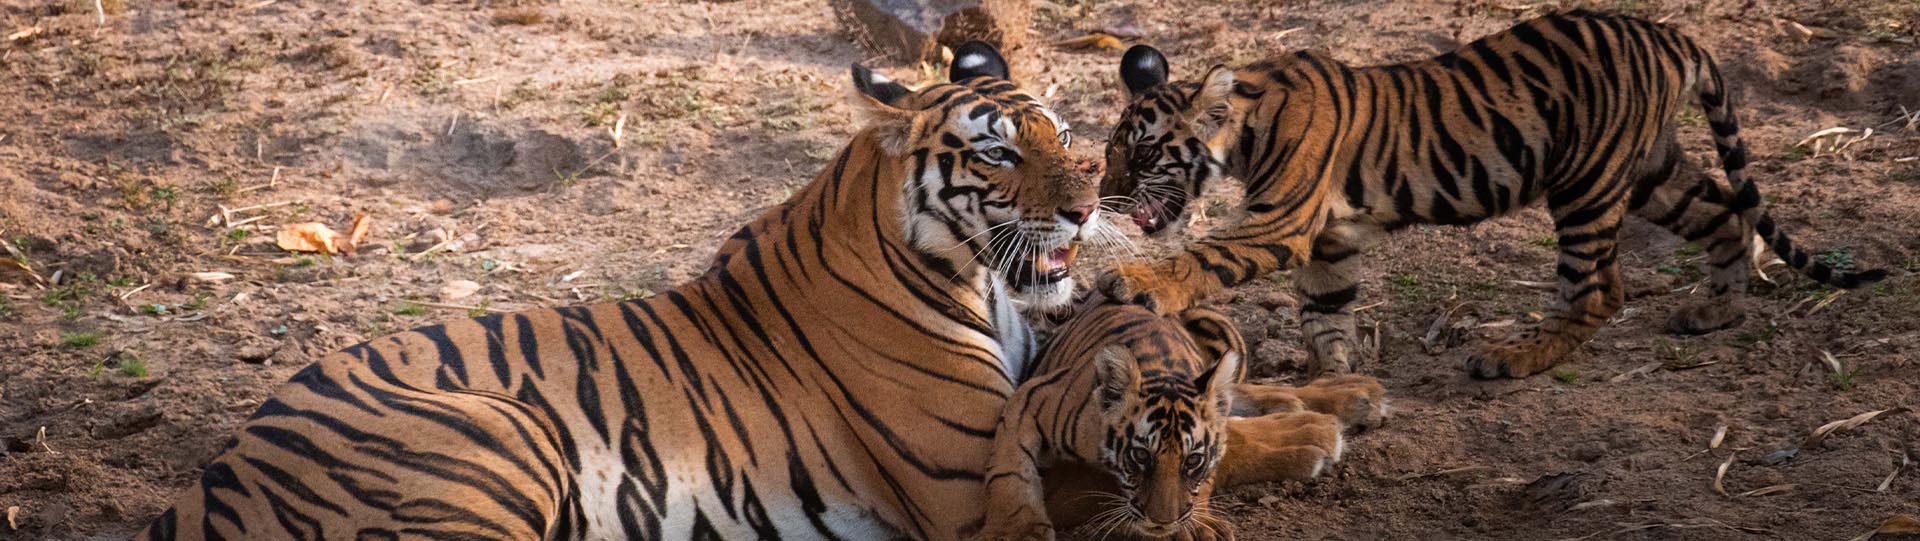 Tiger Safari in India | India TIger Safari | Tigers in India | Ranthambore National Park | Ranthambore Tiger Reserve | Bandhavgarh Tiger Reserve | Wildlife Tours in India